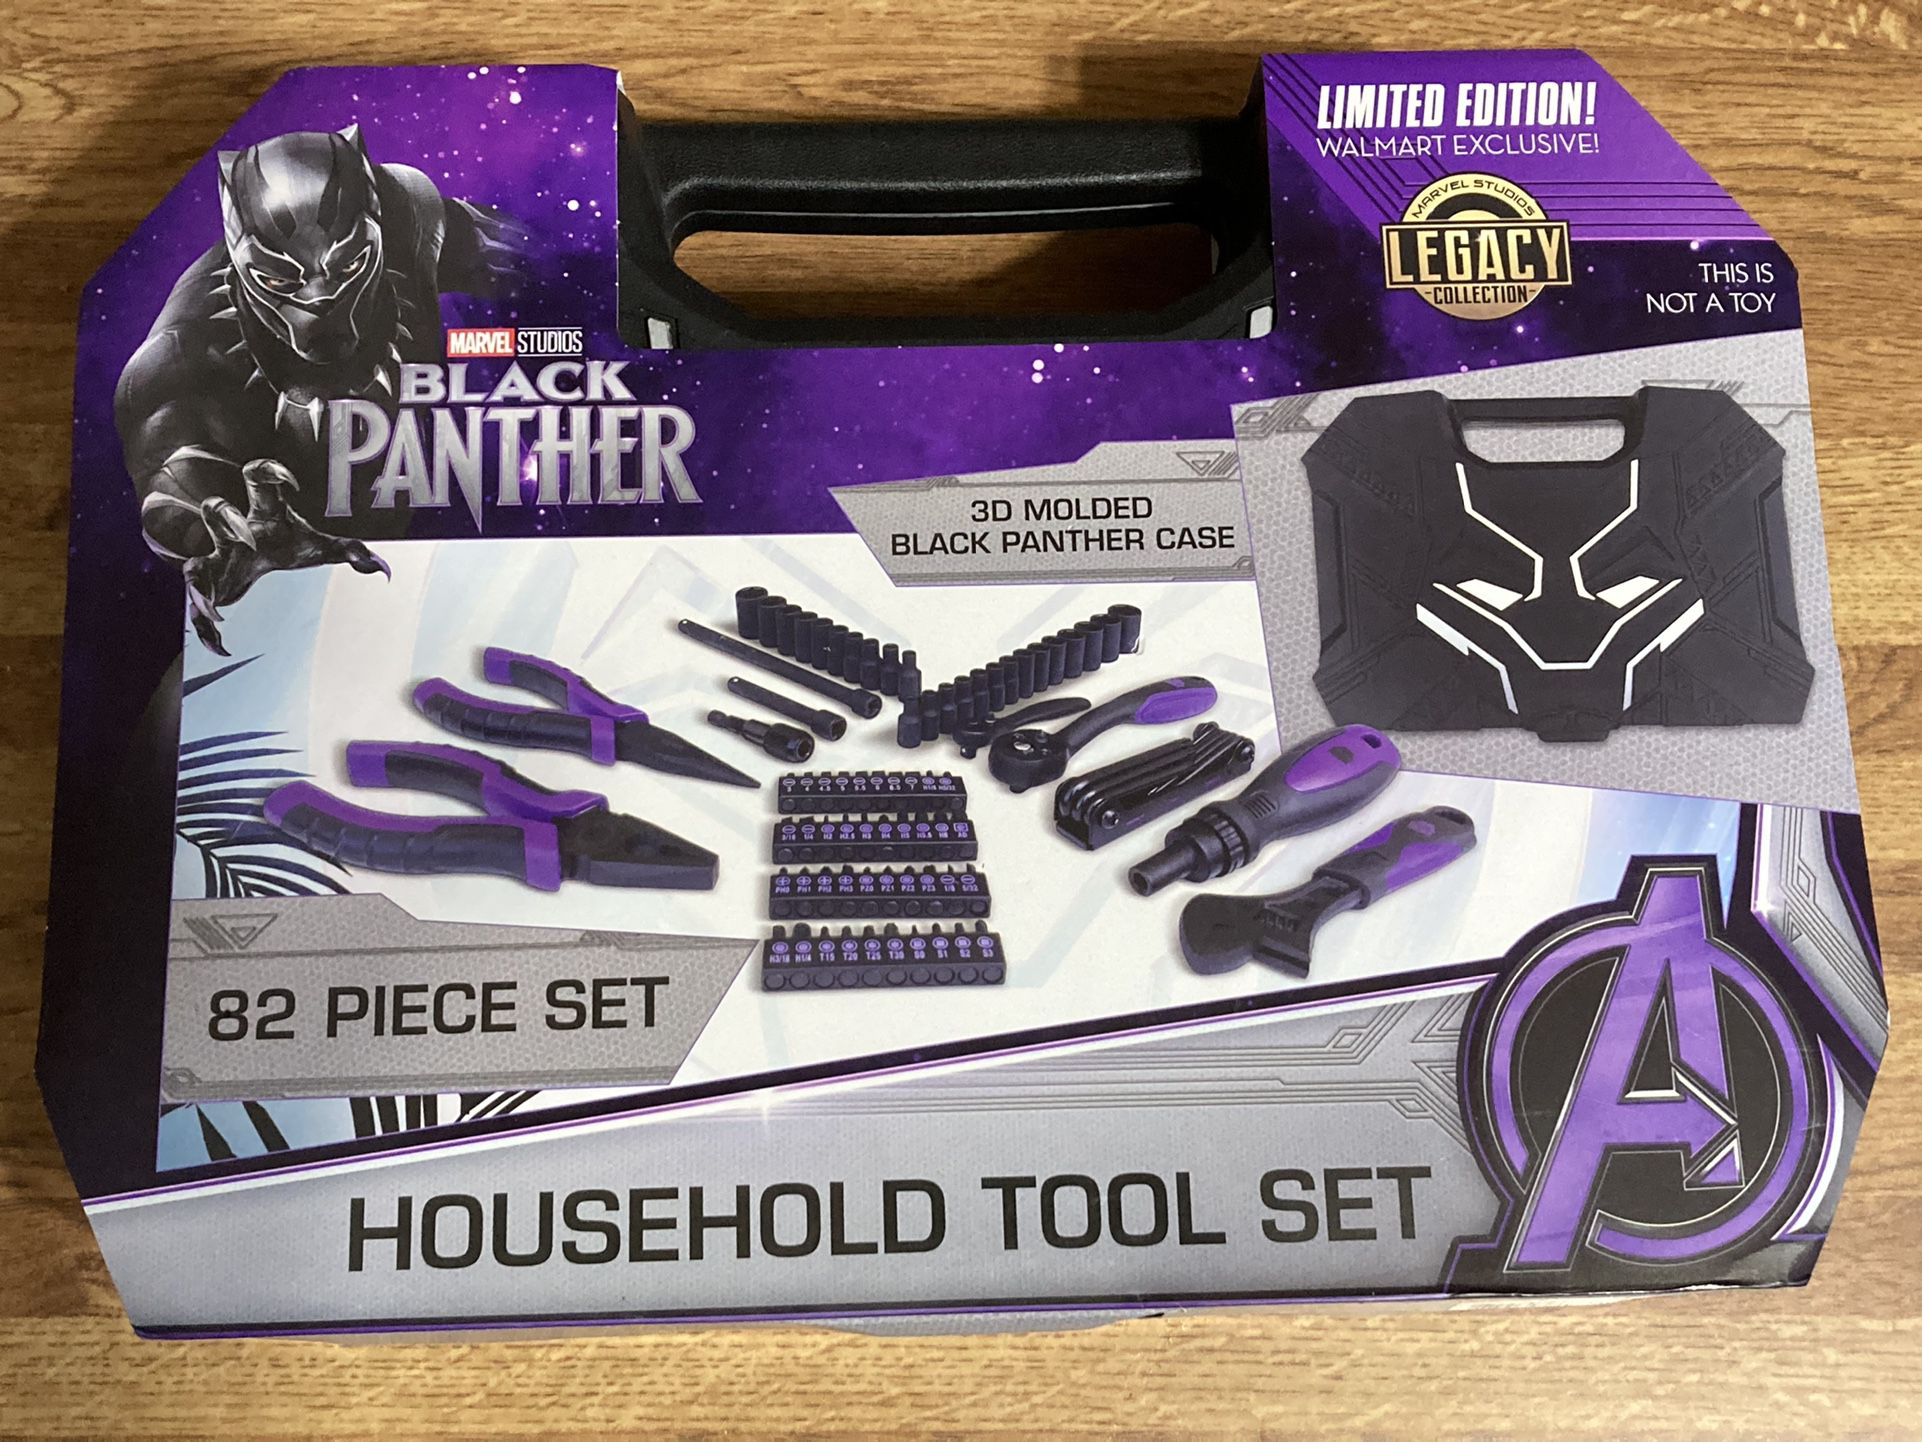 Marvel Black Panther 82 Piece Tool Set, Limited Purple Edition!